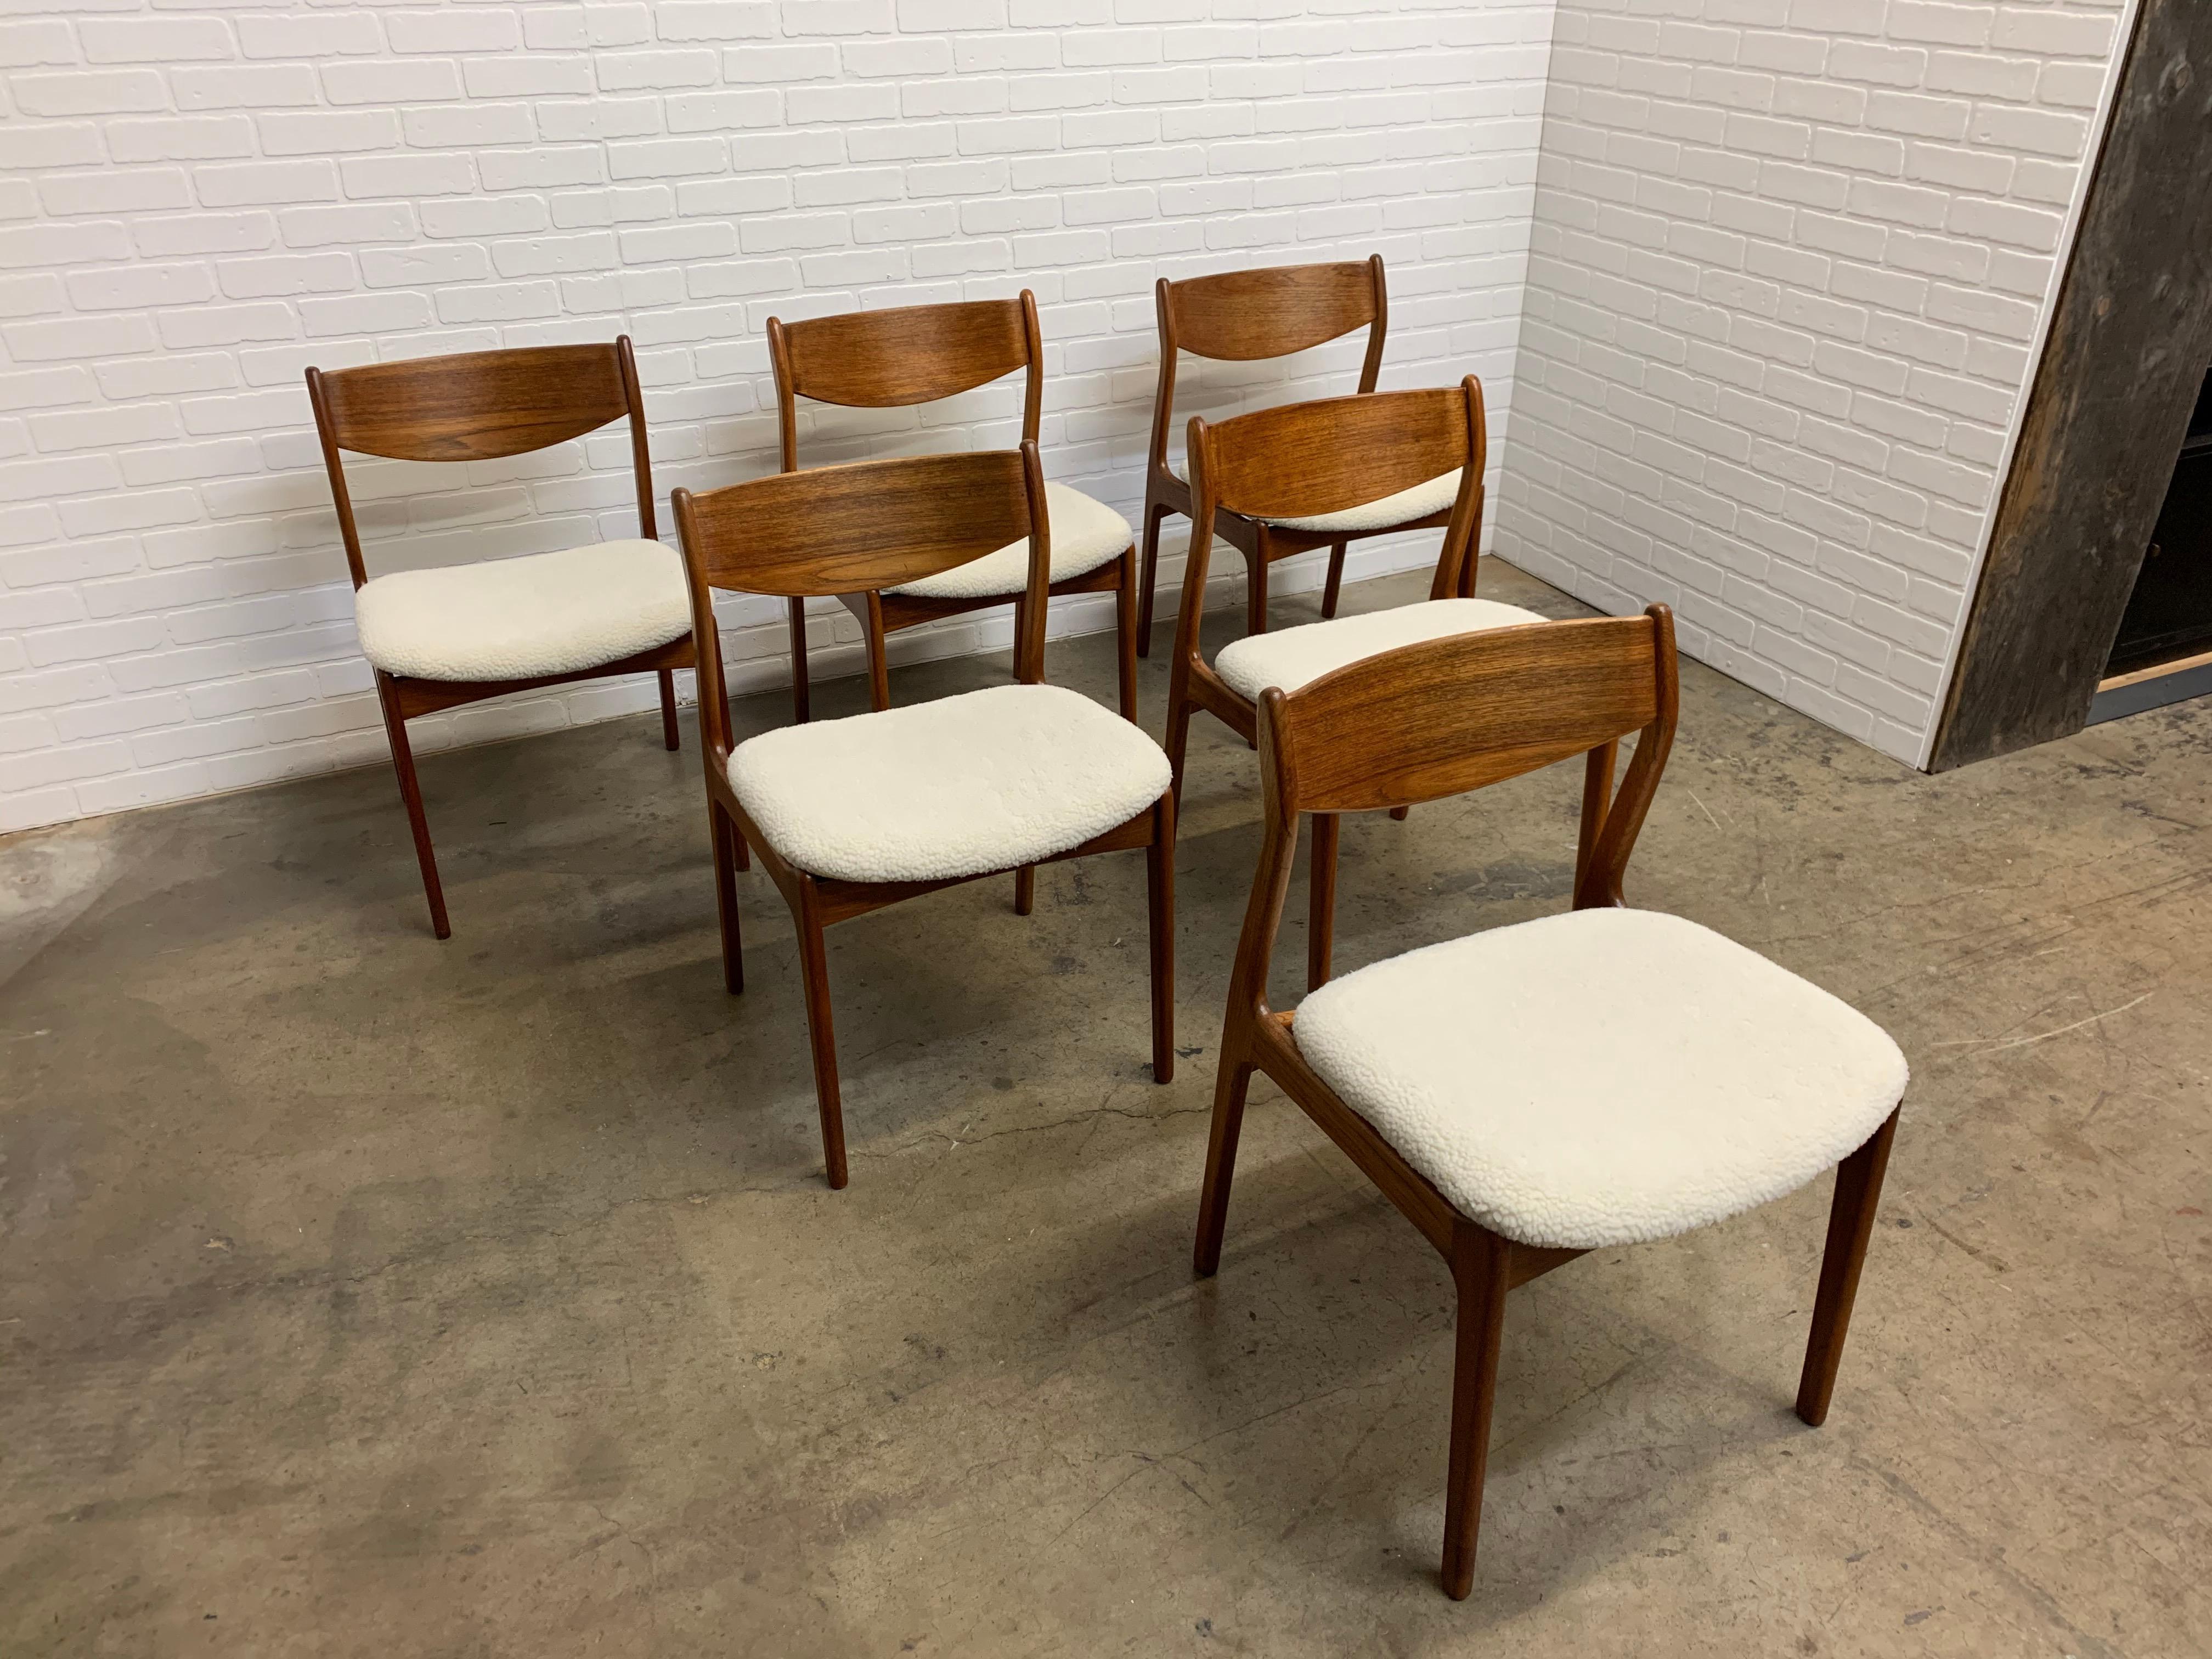 20th Century Danish Modern Dining Chairs by Erik Buch